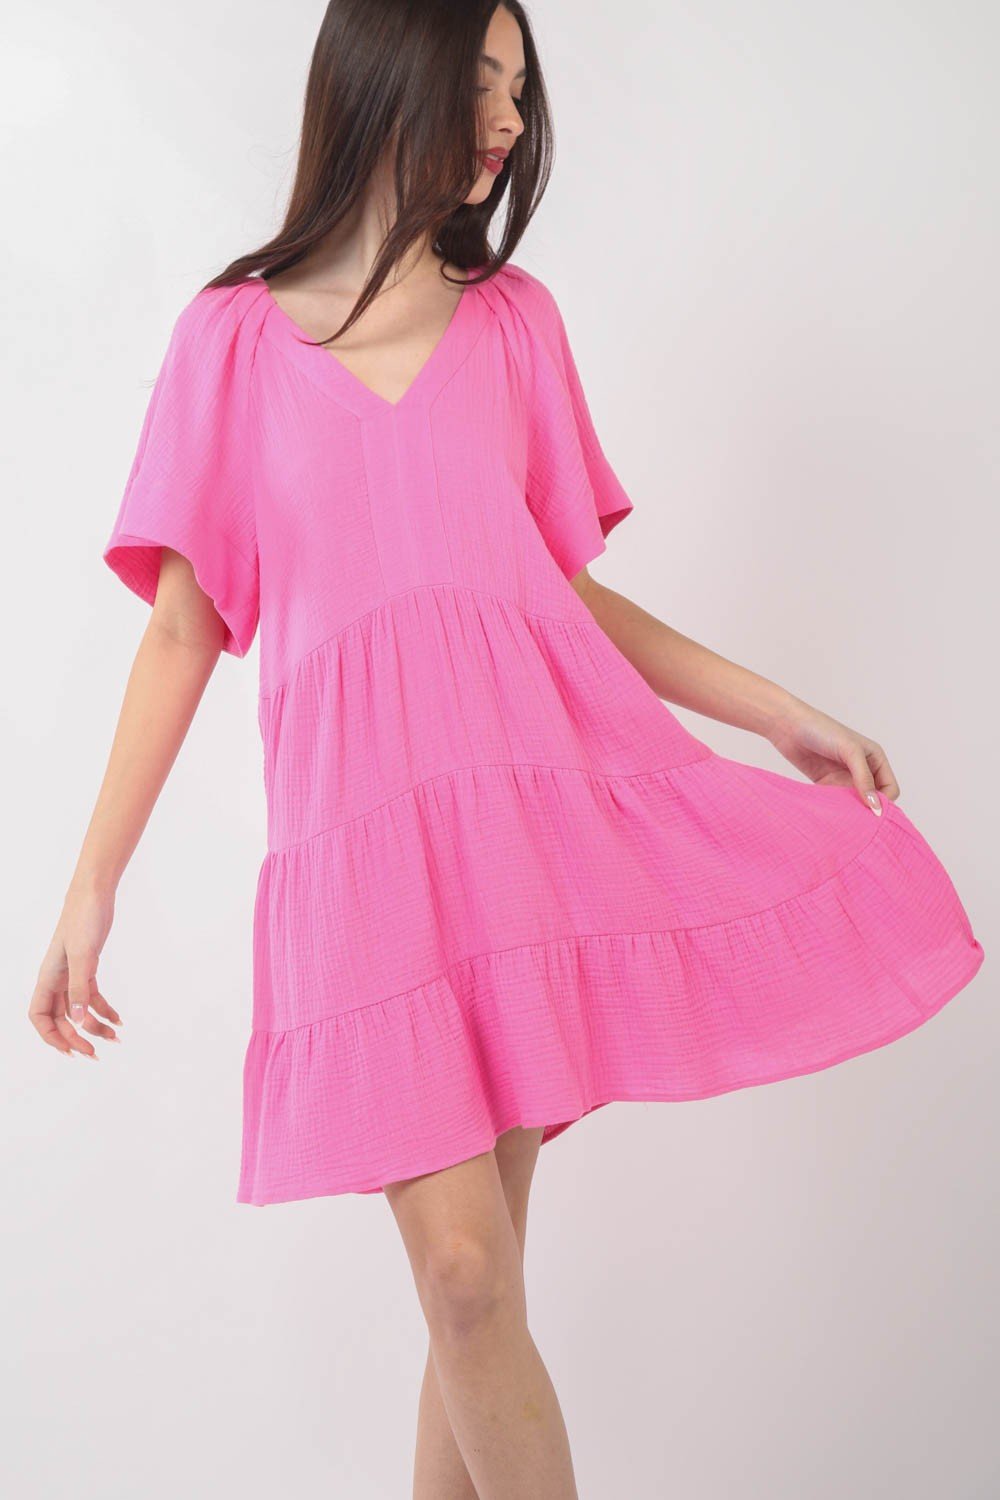 Textured Cotton V-Neck Ruffled Tiered Mini Dress in PinkMini DressVery J